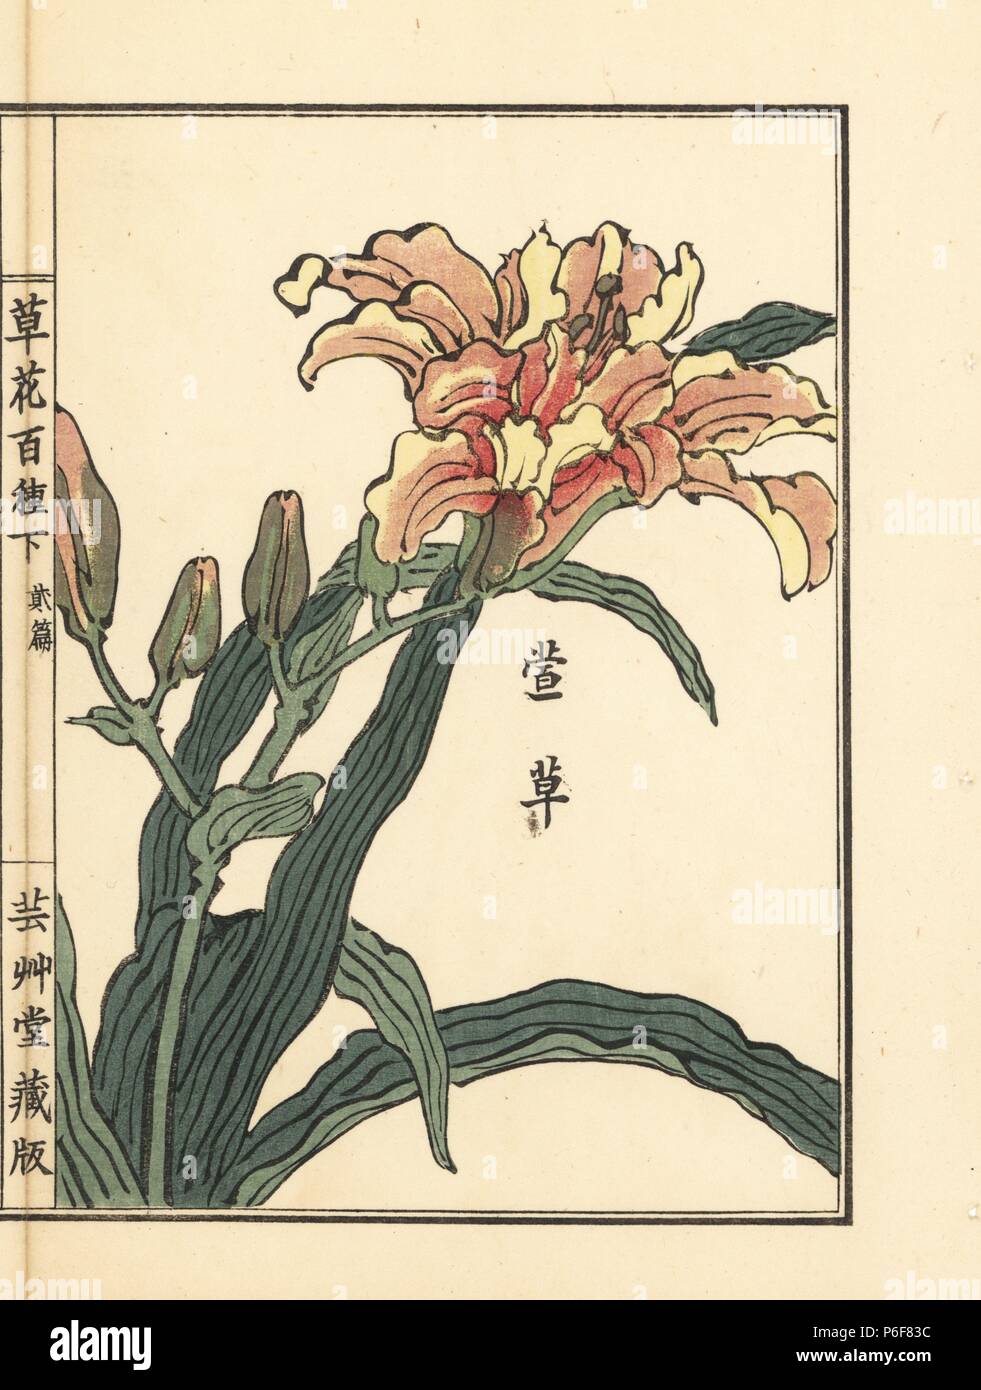 Nokanzou or orange daylily, Hemerocallis fulva var. longituba. Handcoloured woodblock print by Kono Bairei from Kusa Bana Hyakushu (One Hundred Varieties of Flowers), Tokyo, Yamada, 1901. Stock Photo